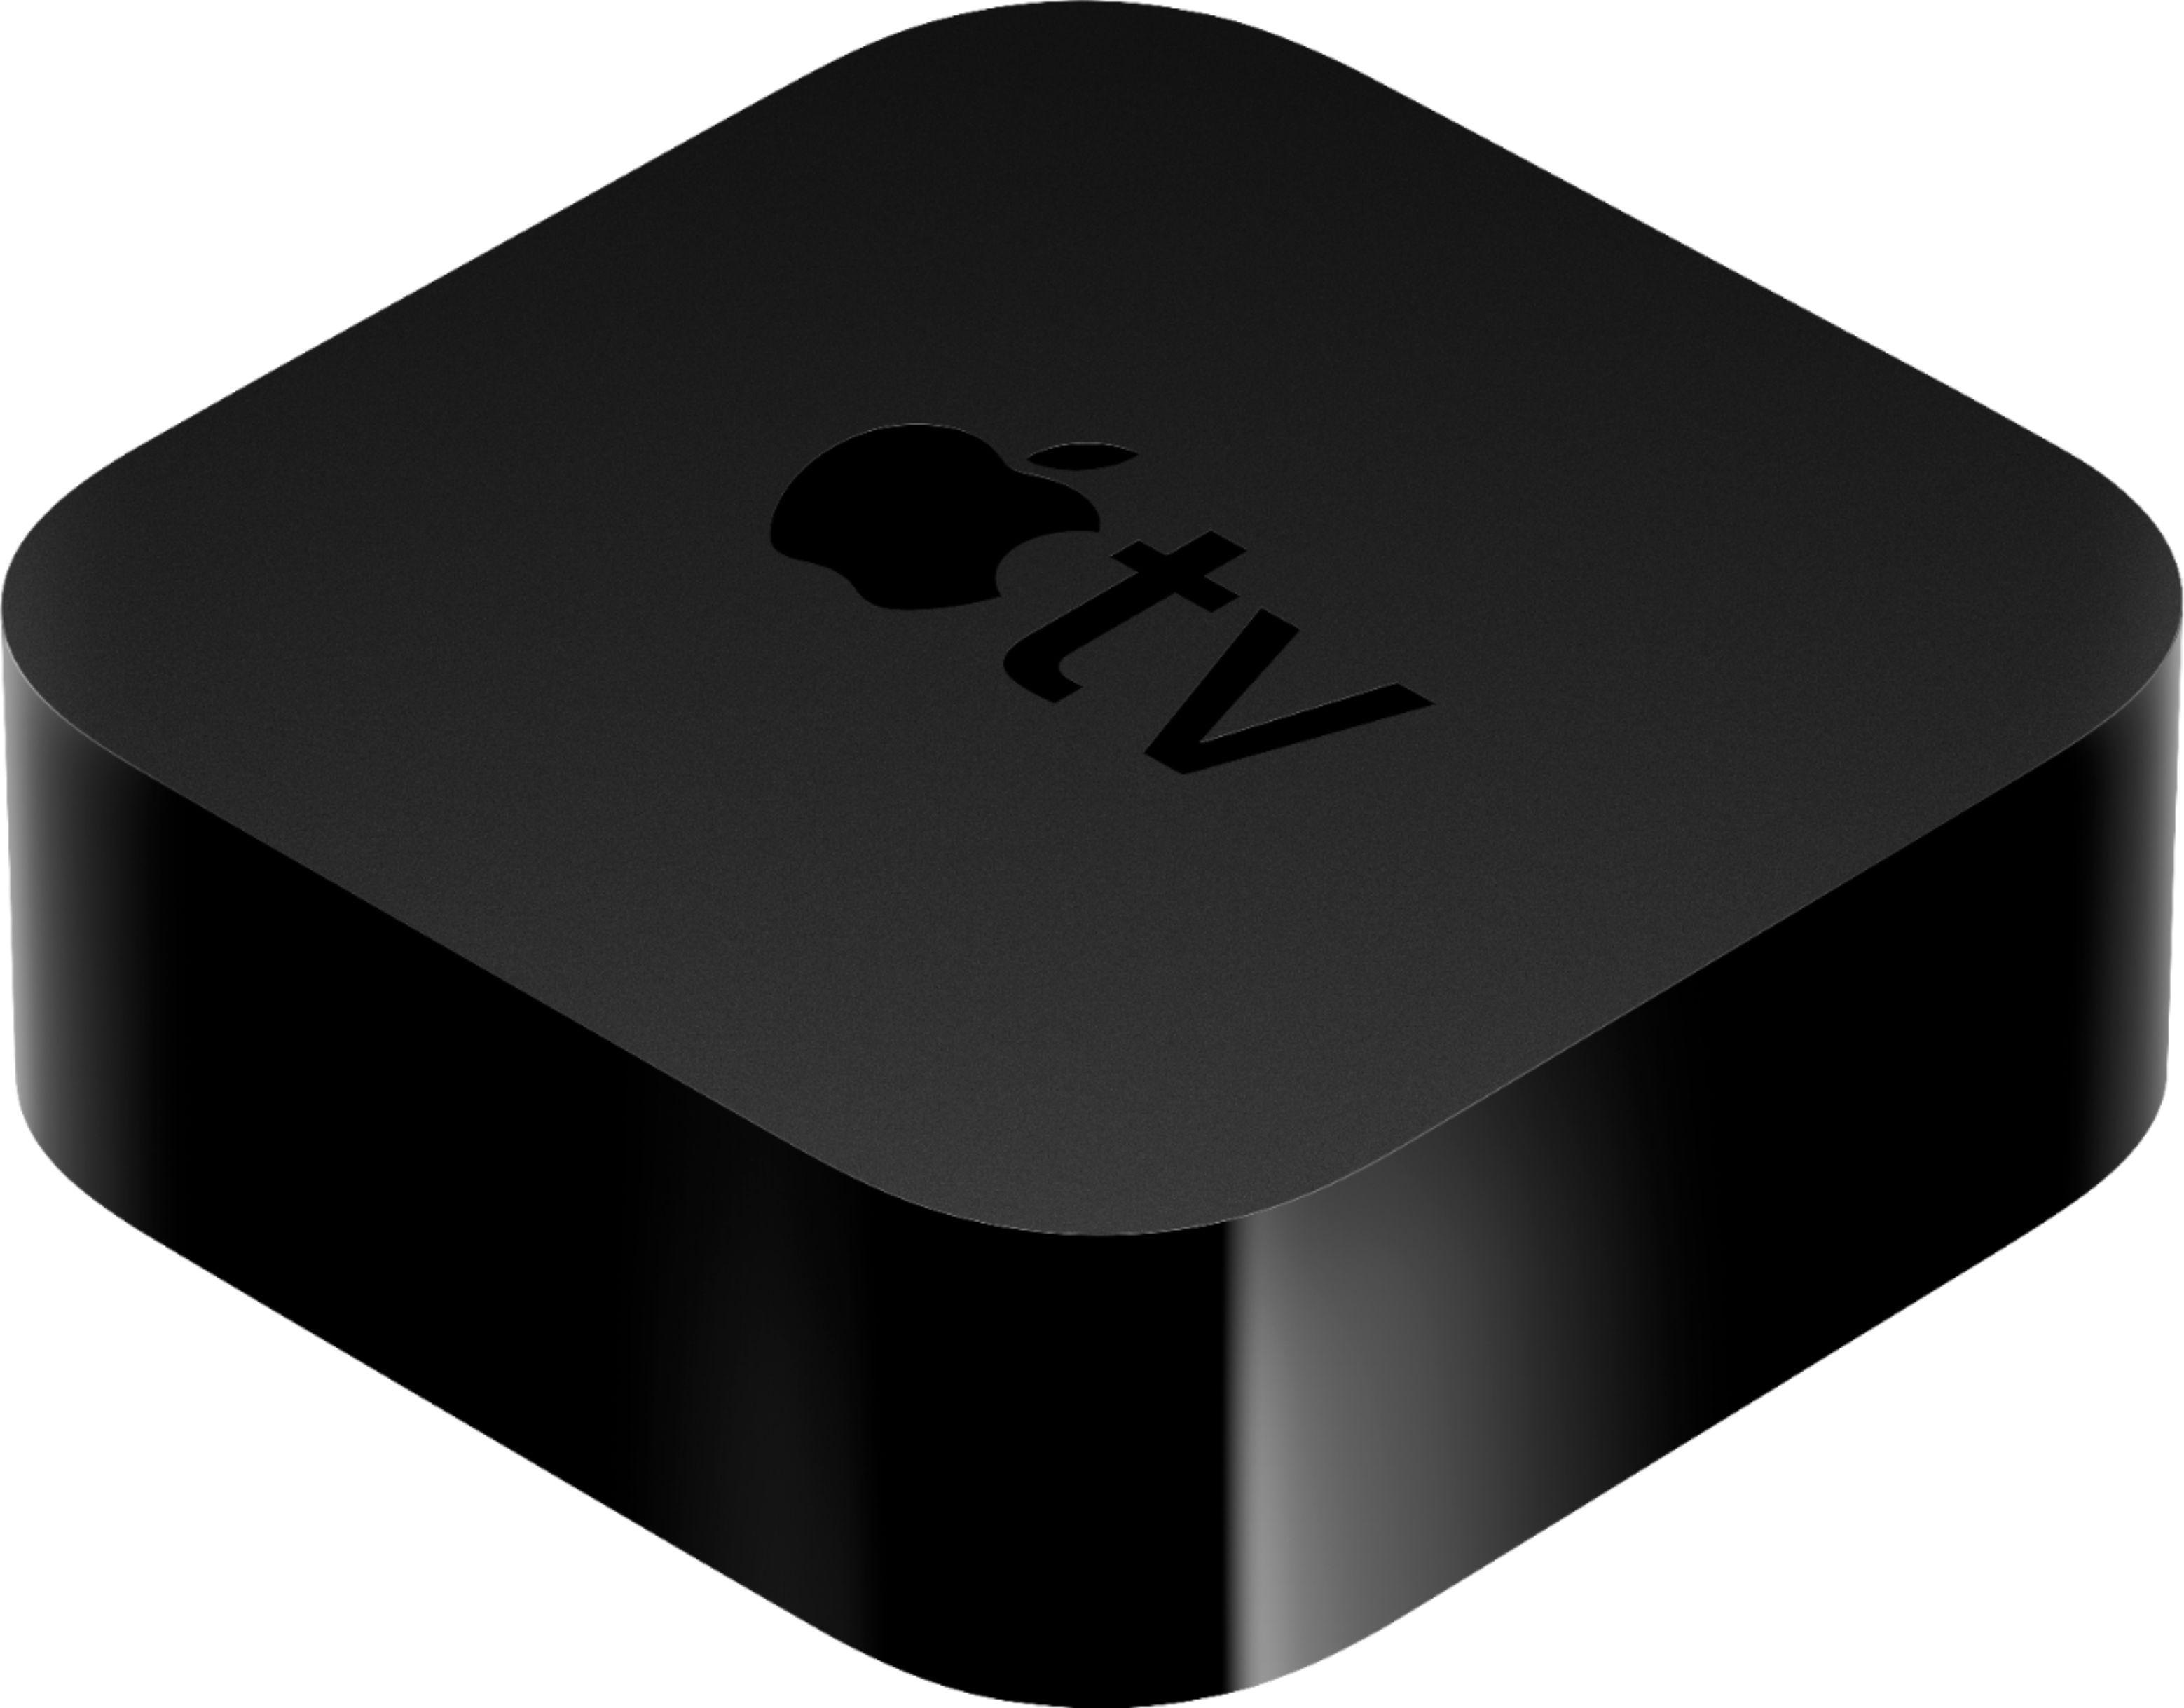 Apple TV 4K 32GB (2nd Generation) Black MXGY2LL/A - Best Buy